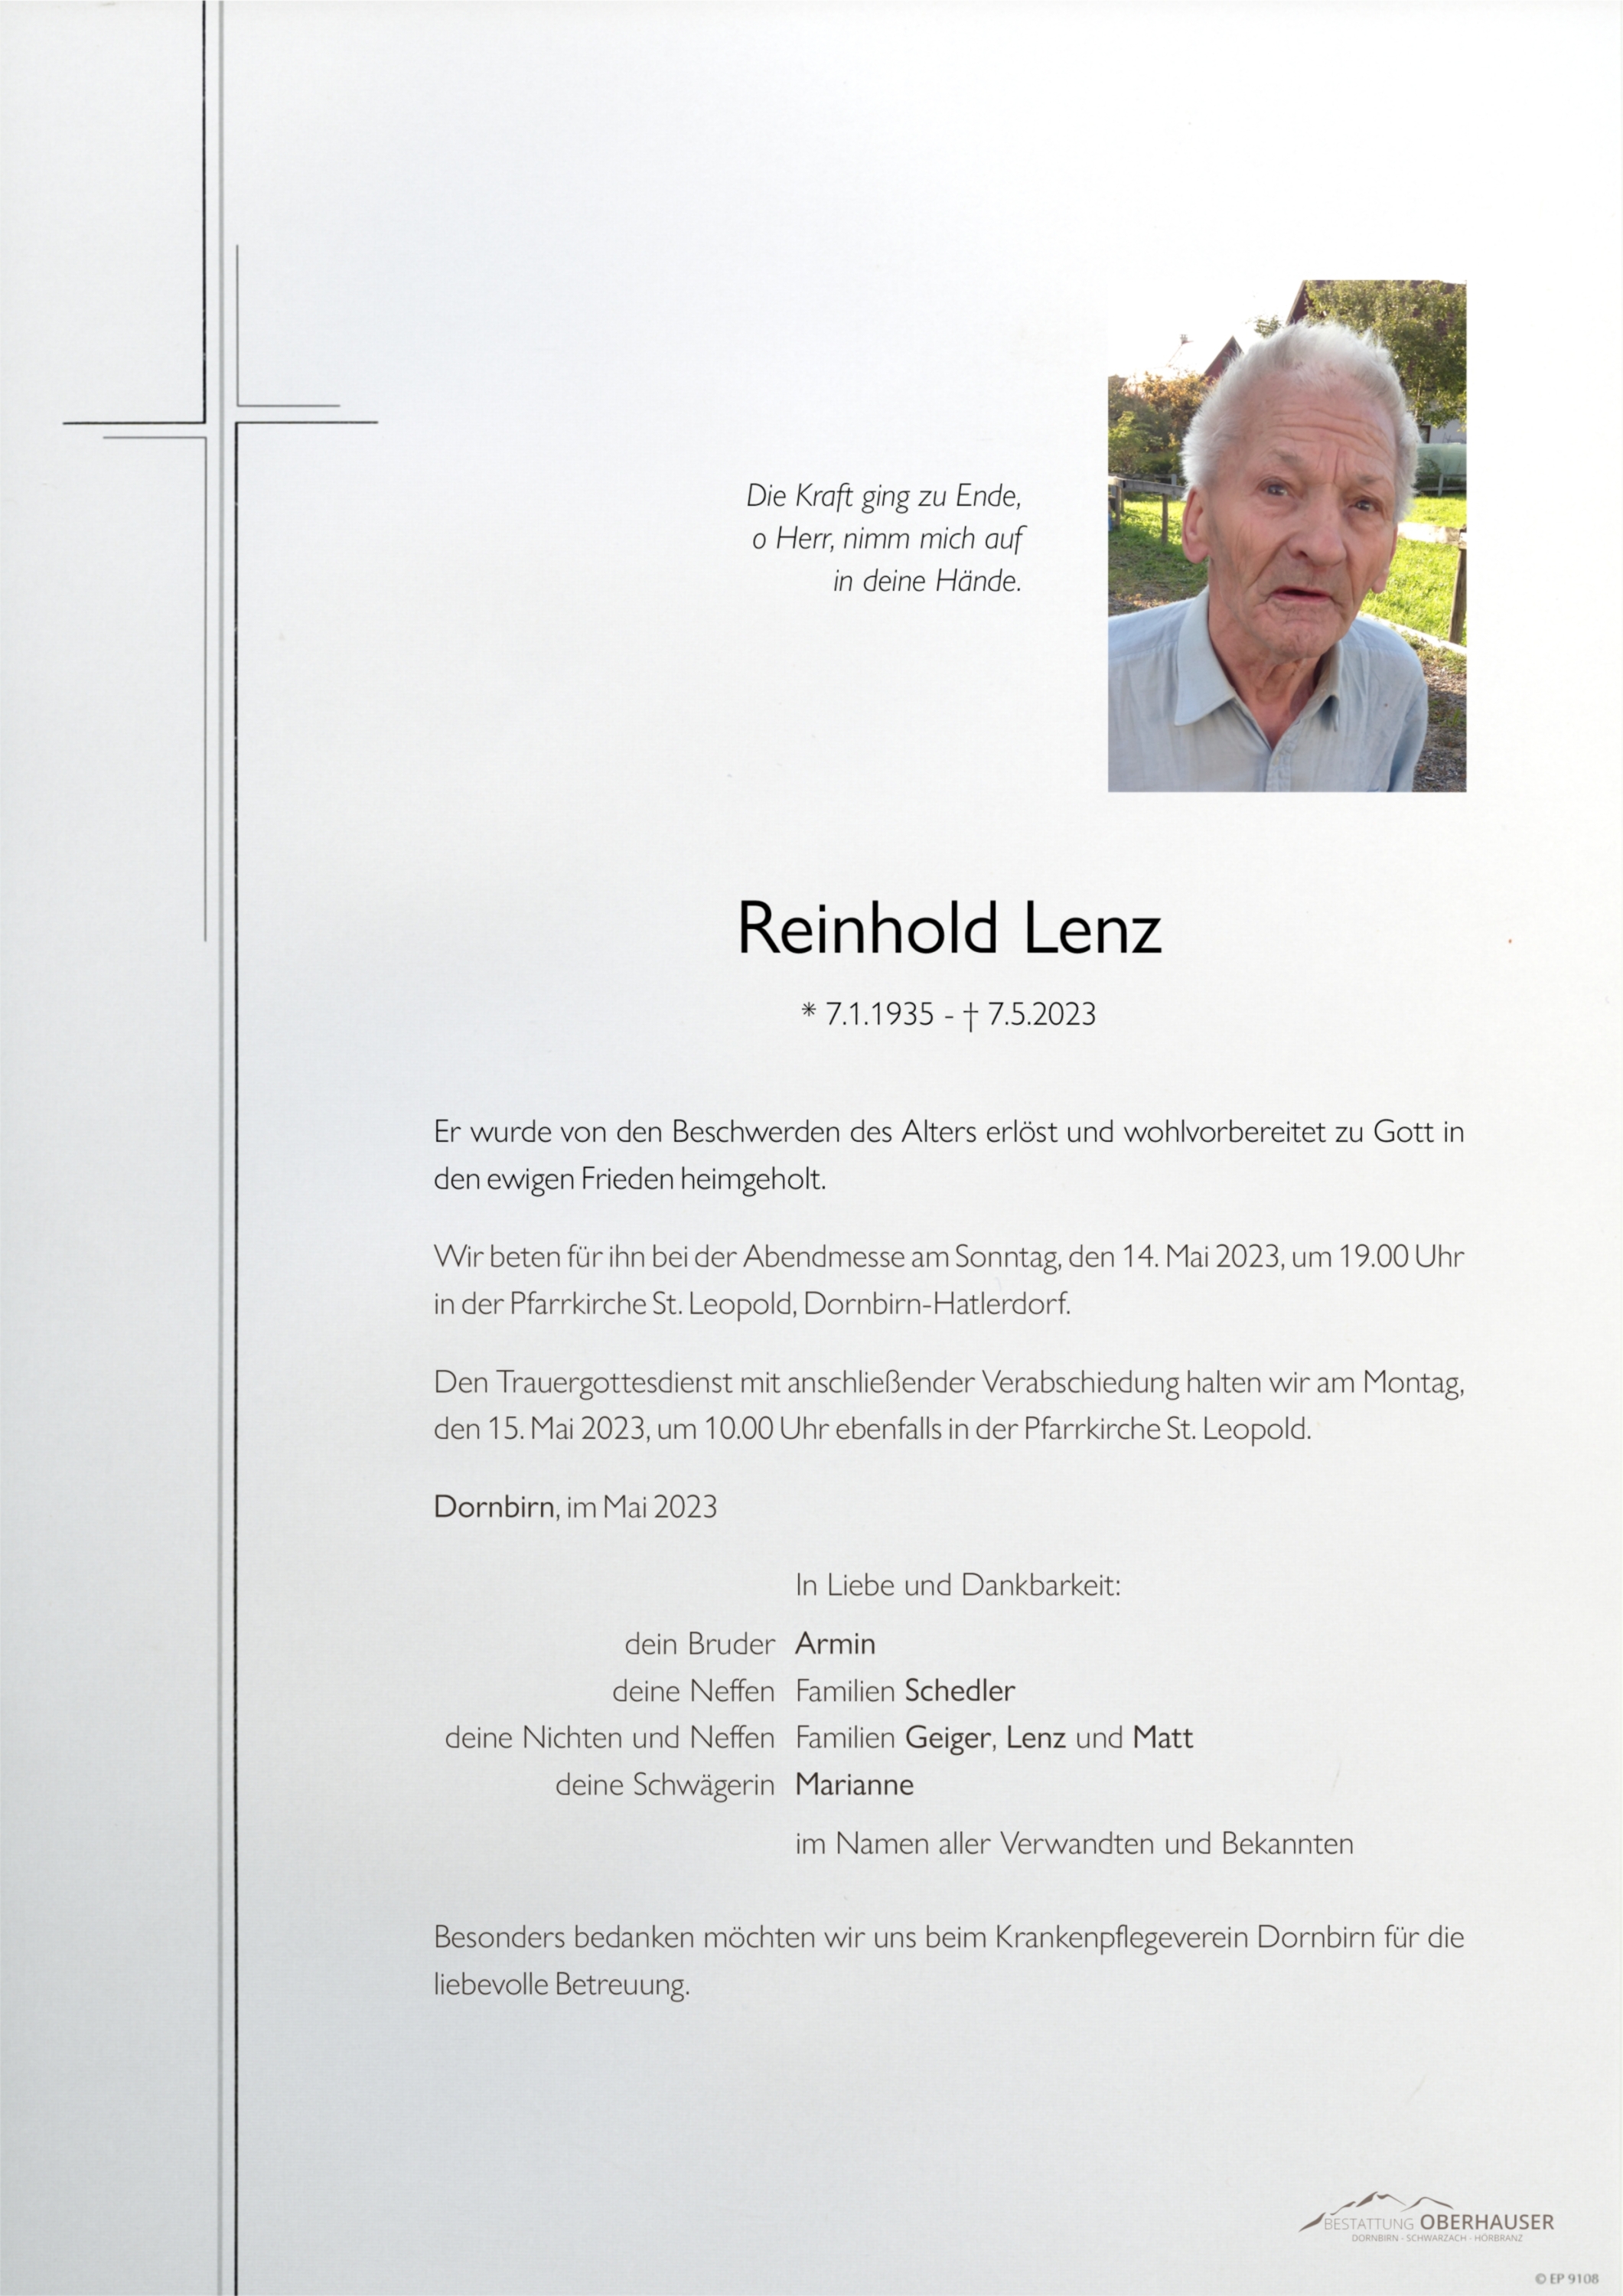 Reinhold Lenz